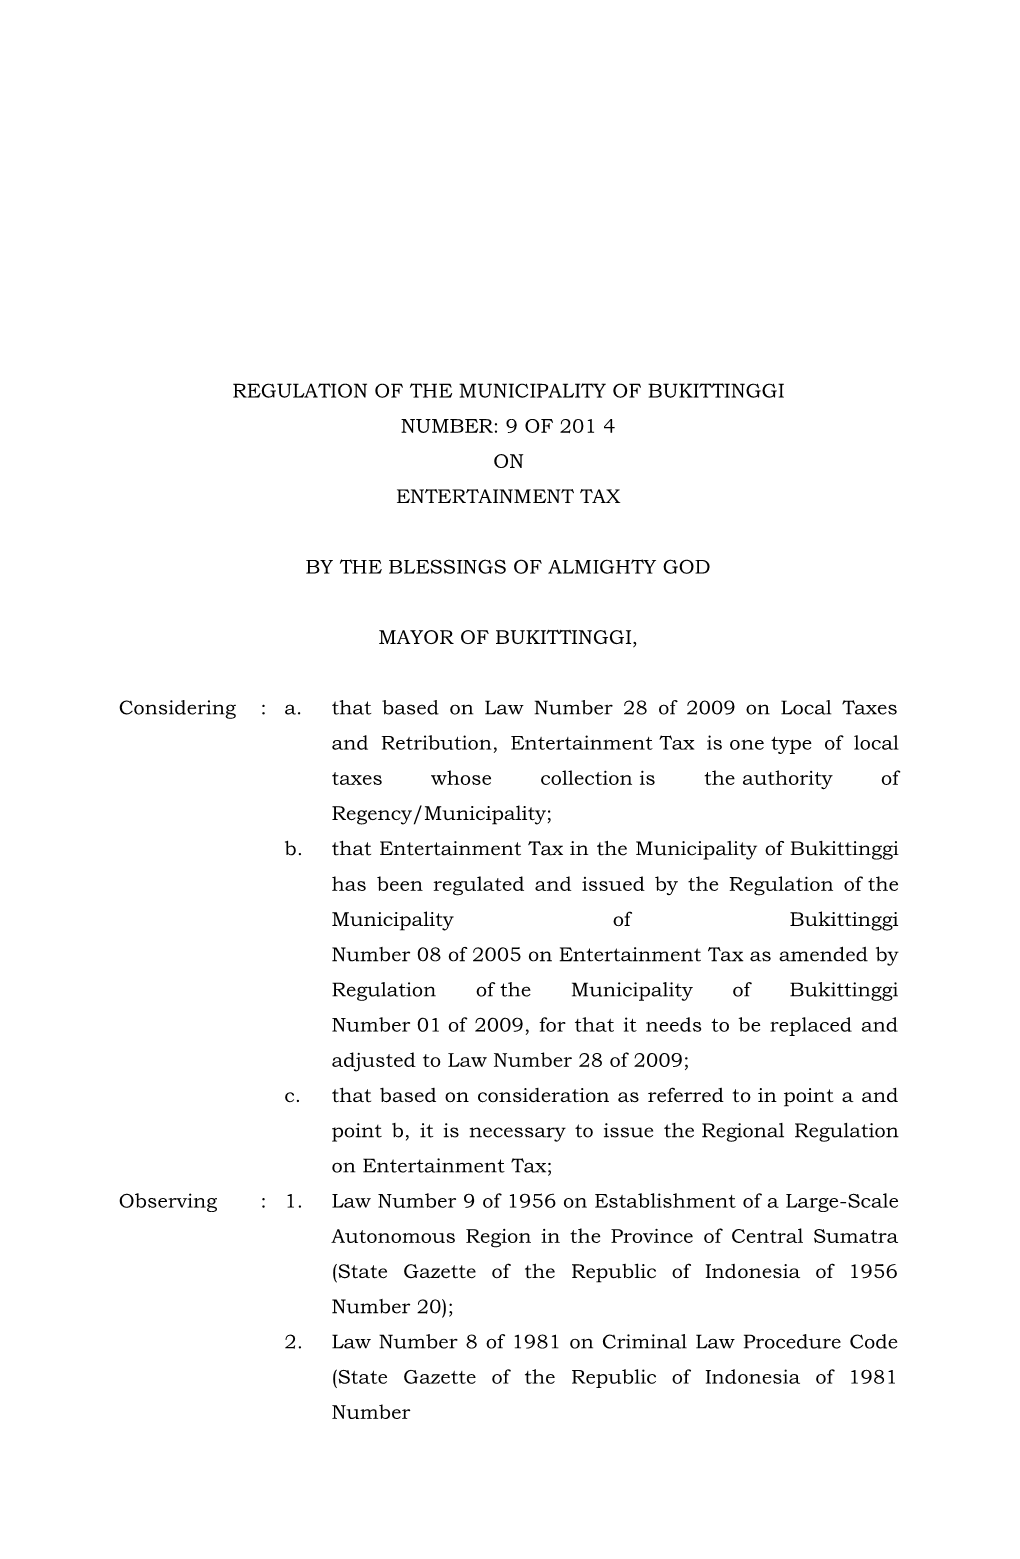 Regulation of the Municipality of Bukittinggi Number: 9 of 201 4 on Entertainment Tax